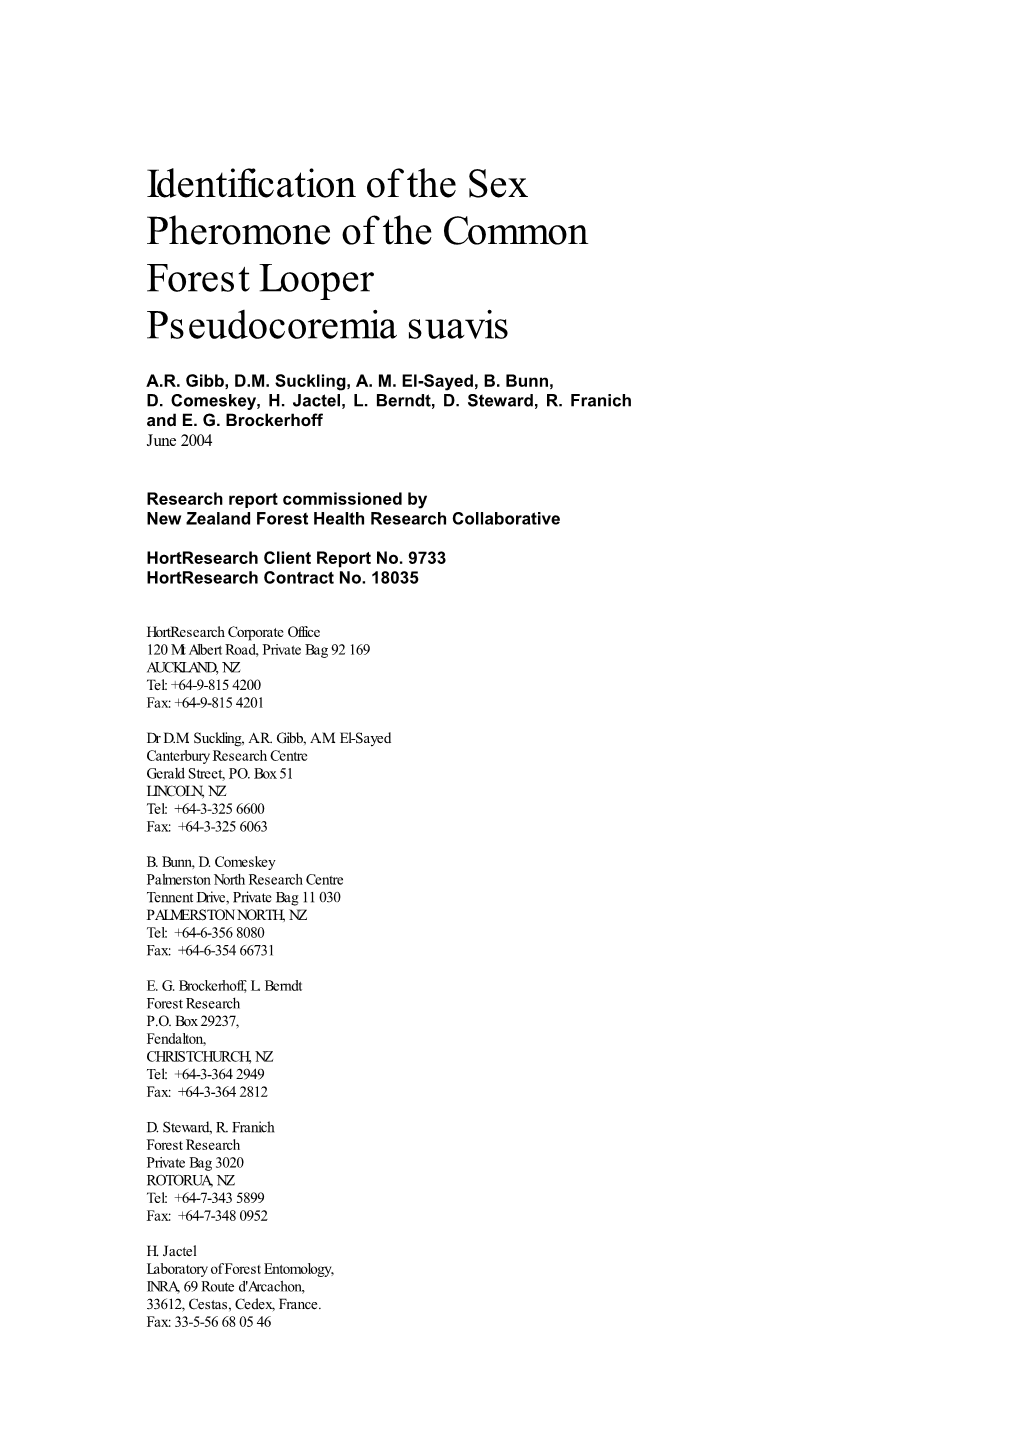 Identification of the Sex Pheromone of the Common Forest Looper Pseudocoremia Suavis